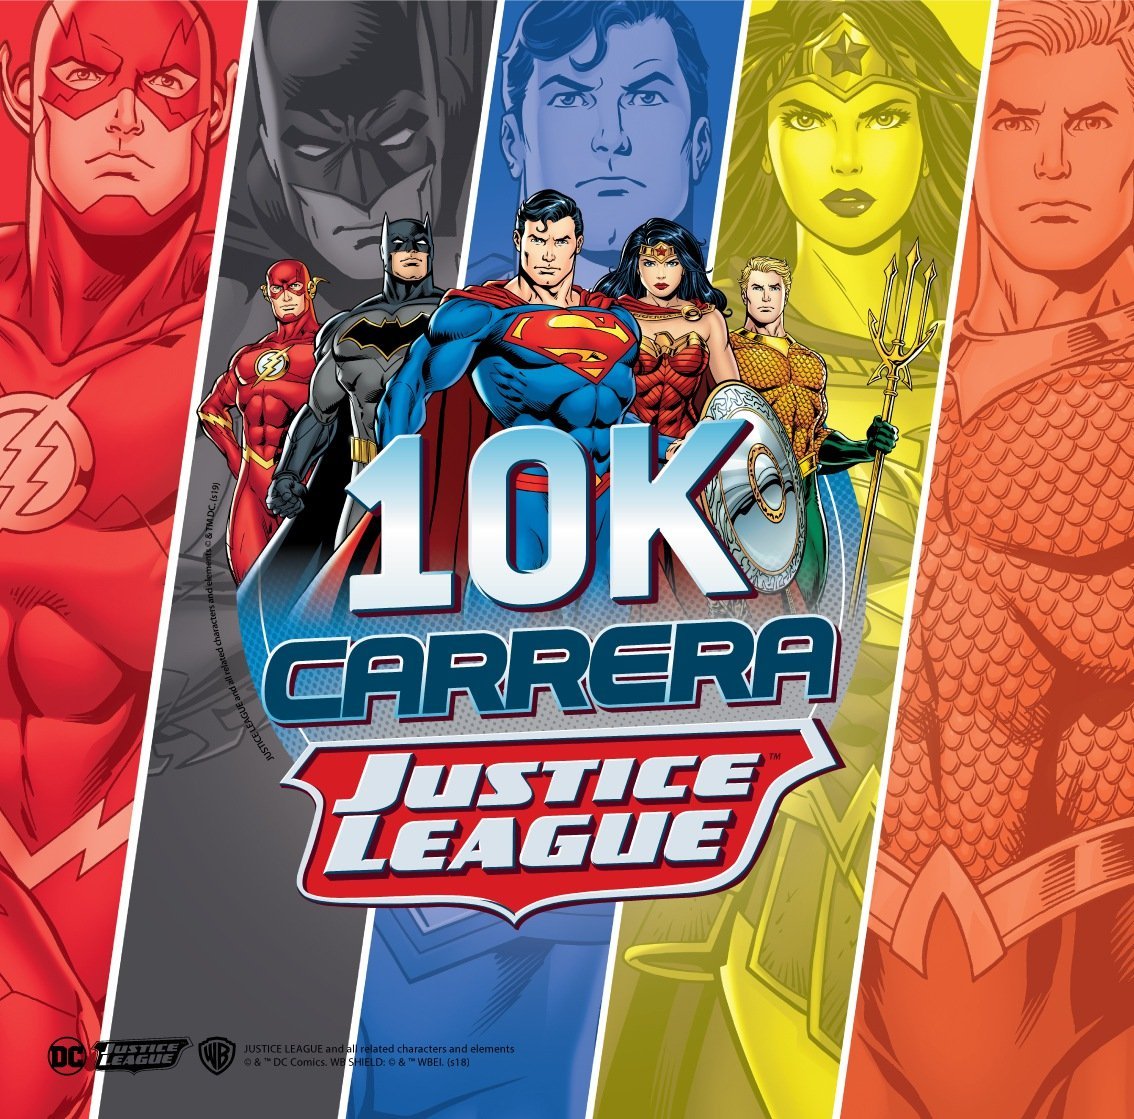 Justice League 10K: se inició venta de entradas para la carrera